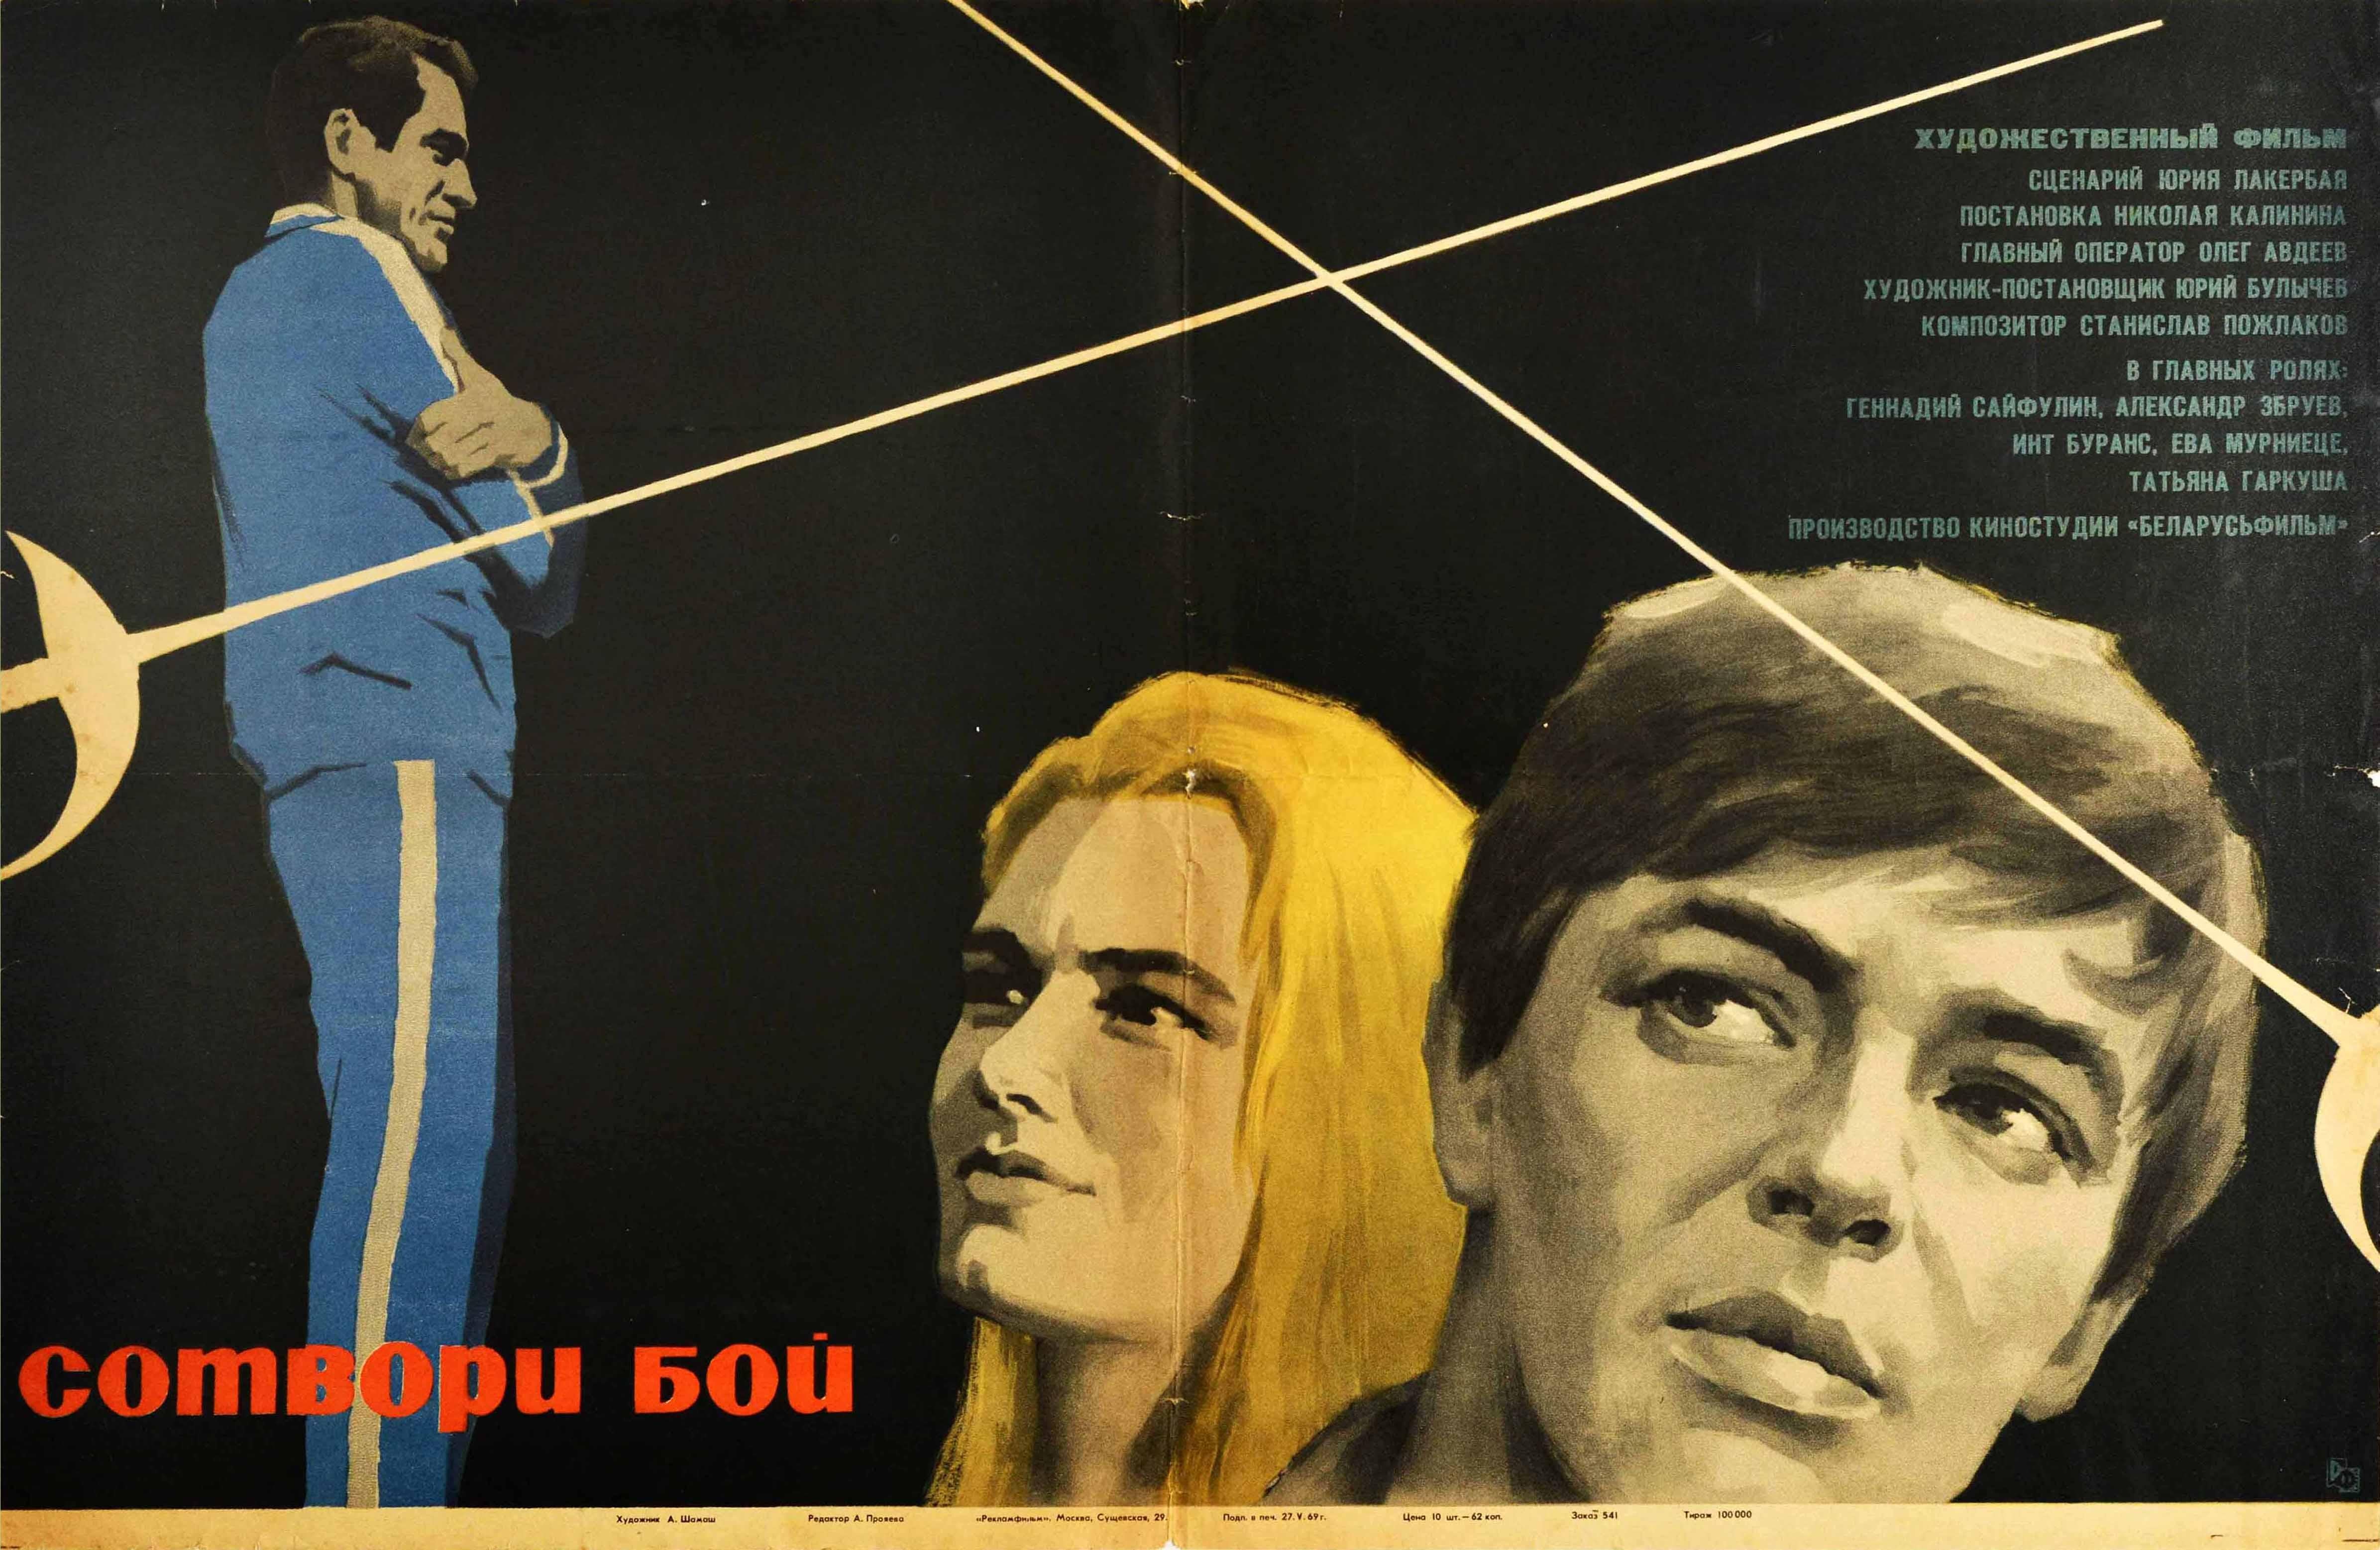 A. Shamash Print - Original Vintage Film Poster Sotvori Boy Soviet Movie Fencing Champions Battle